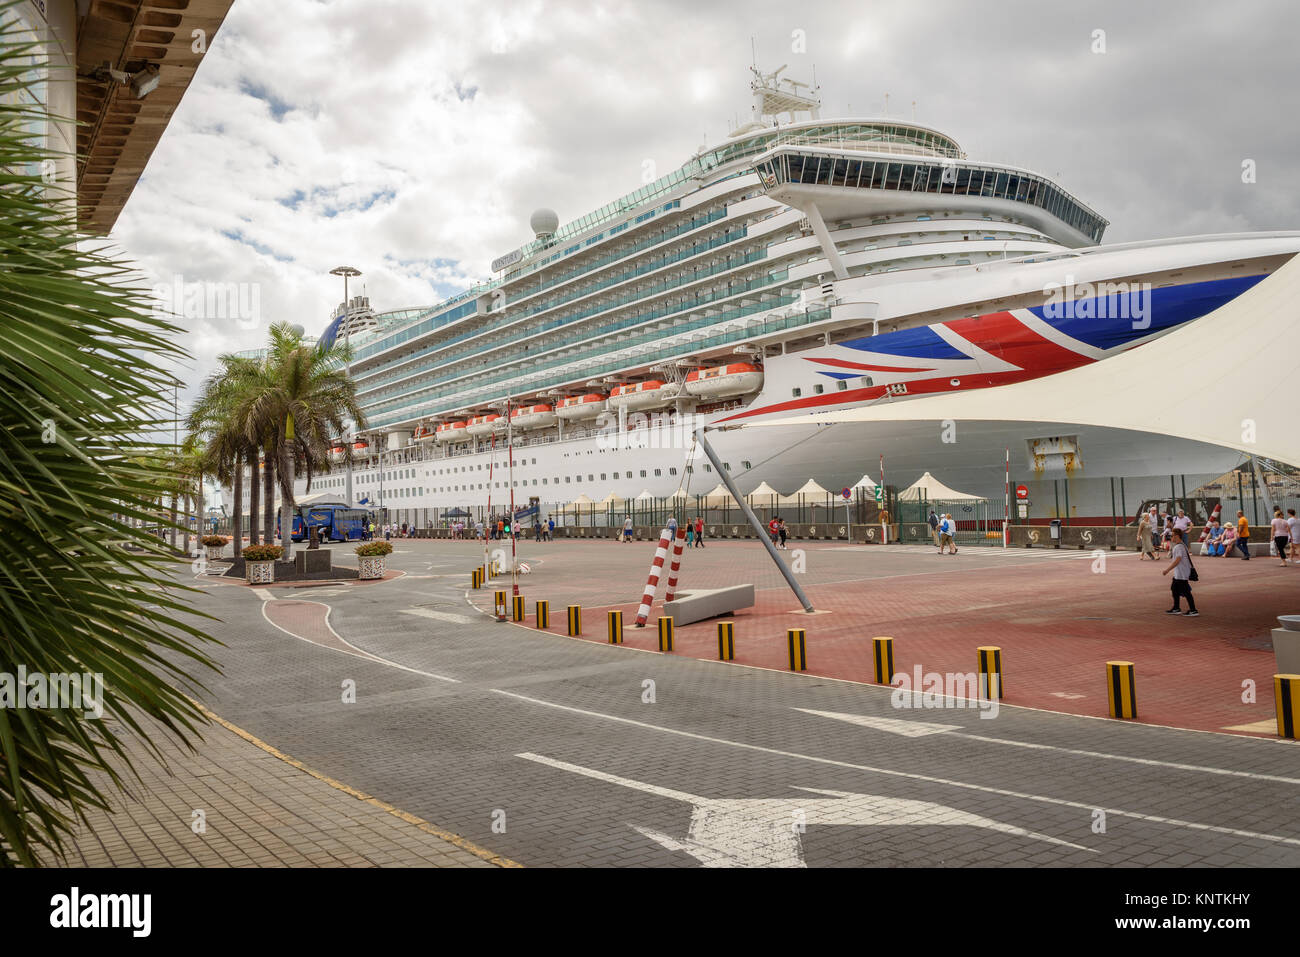 P&O Ventura docked in Gran Canaria Stock Photo